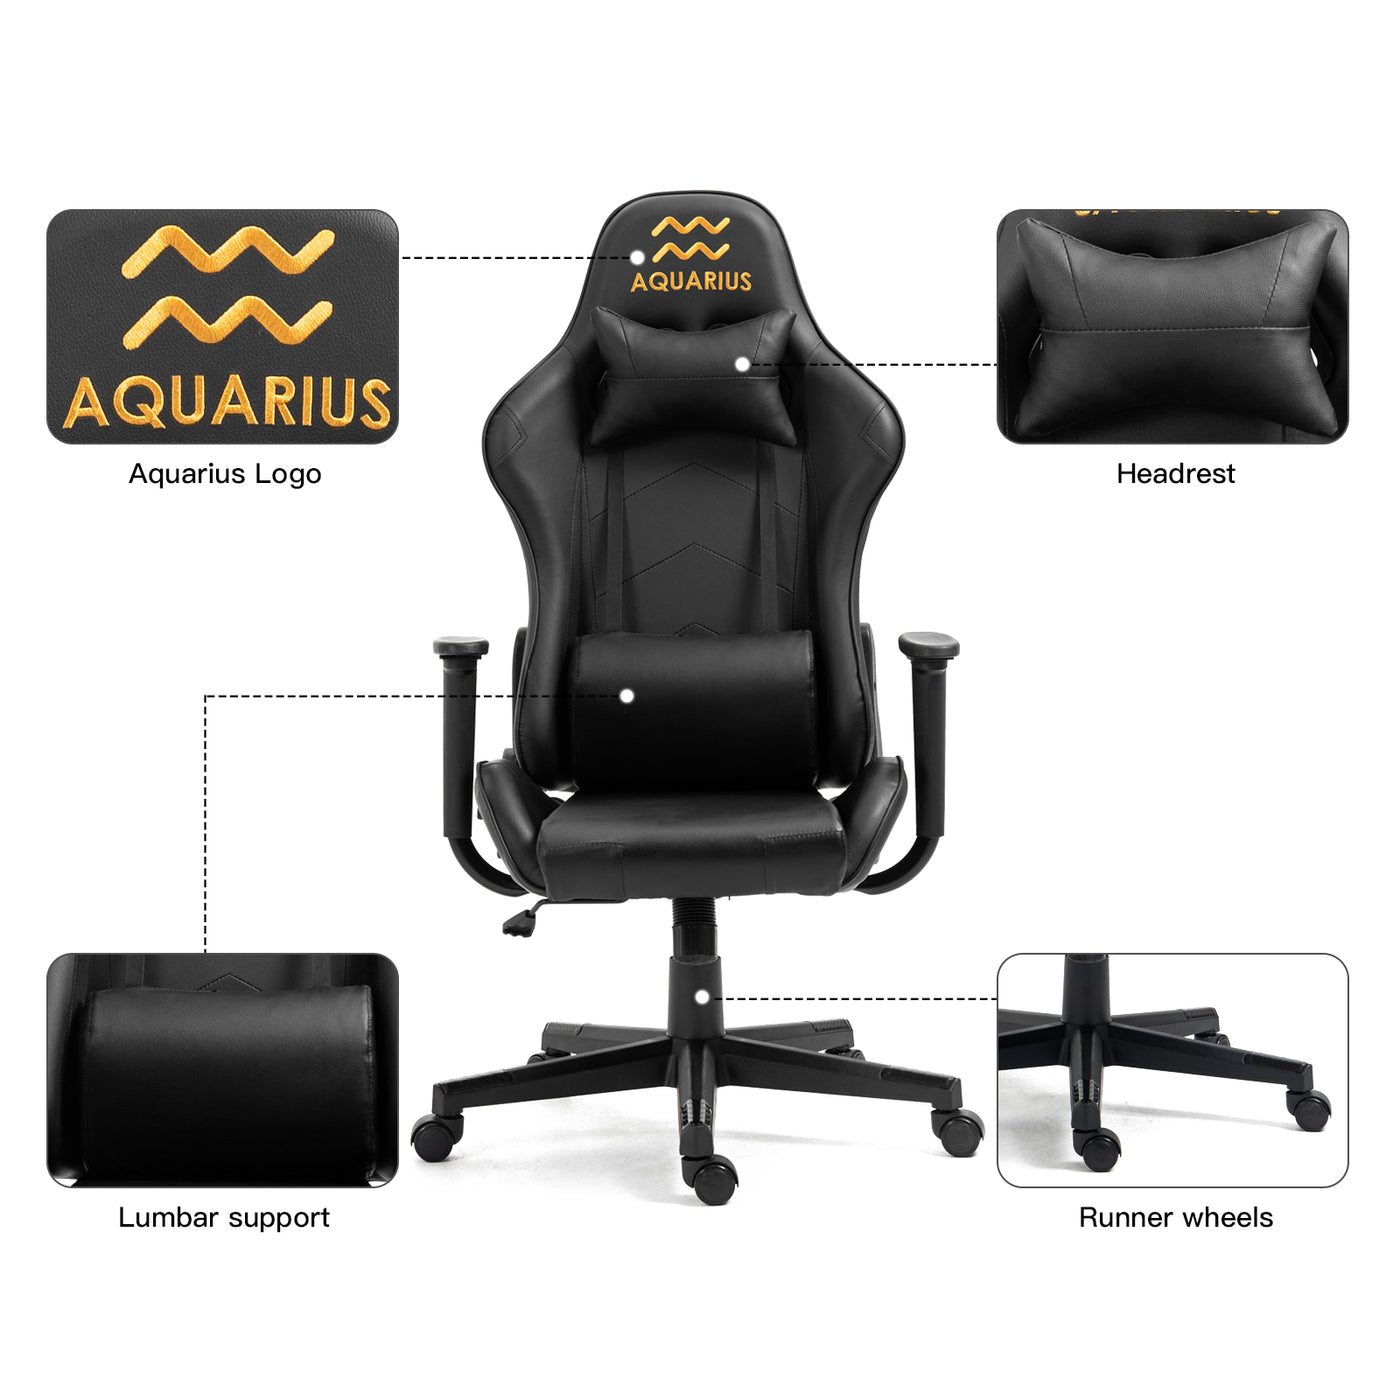 Ergonomic Office Swivel Recliner Executive Gaming Chair Headrest Computer Seat